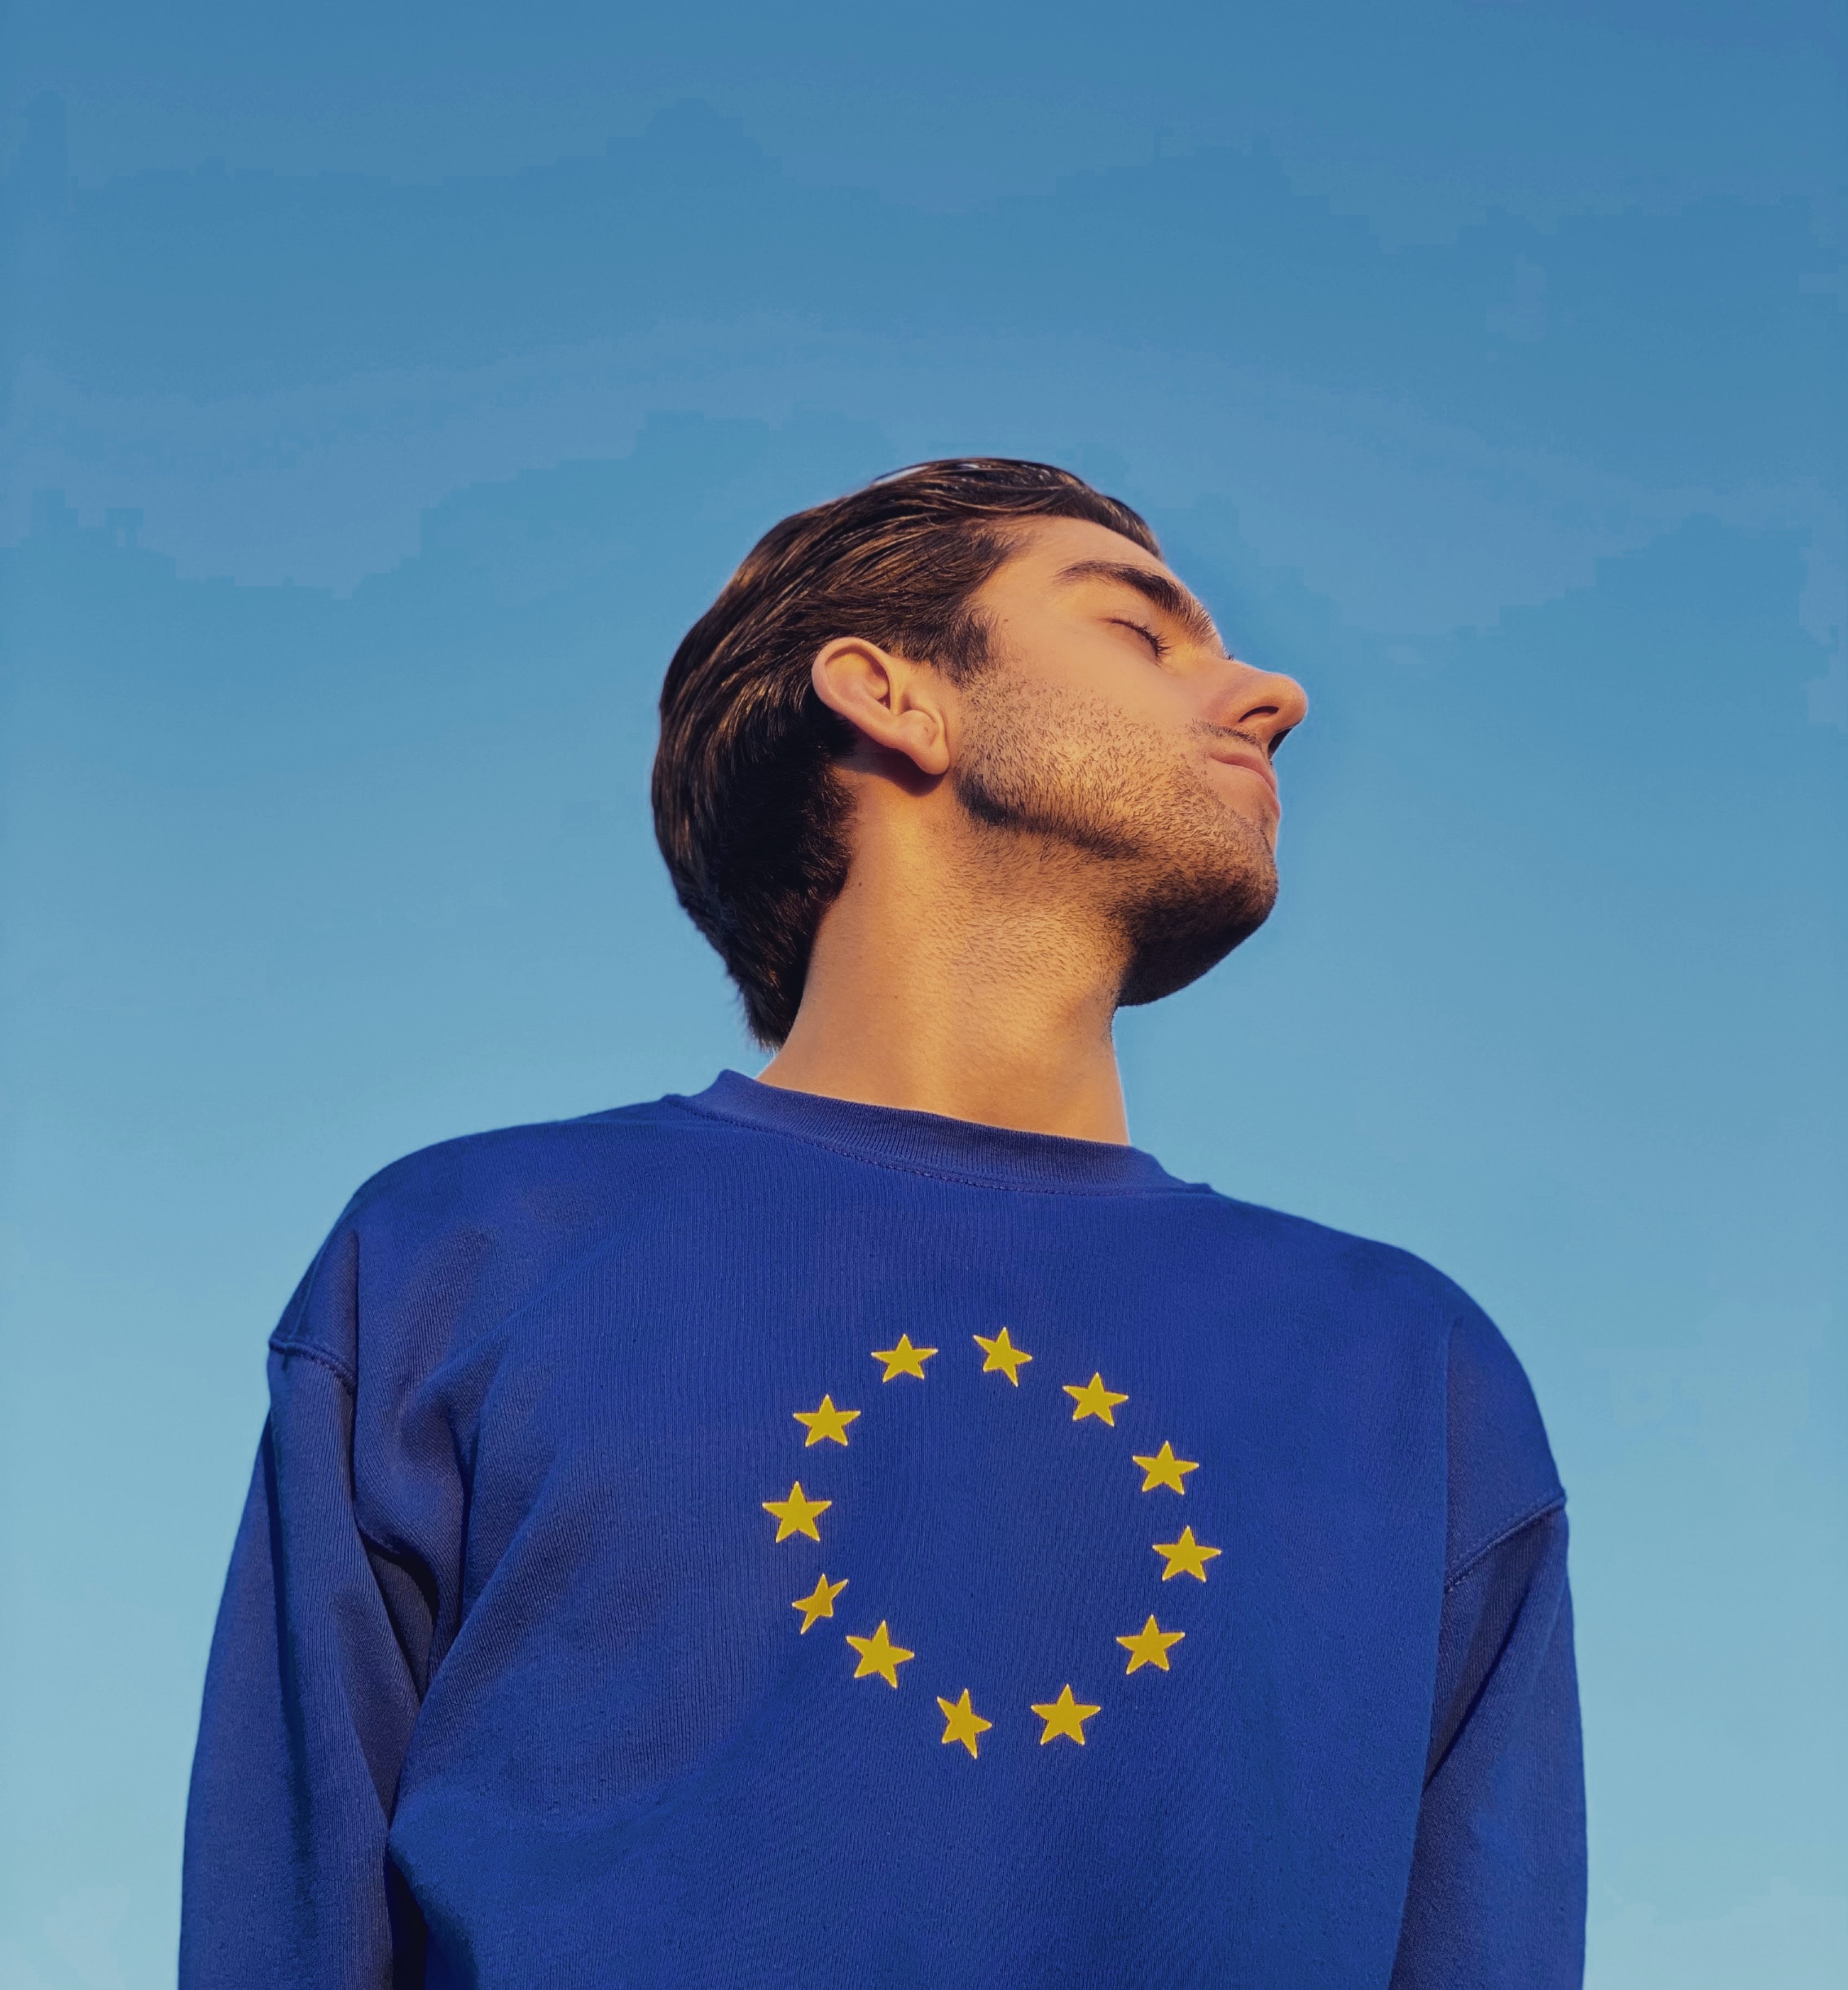 muž s modrým svetrem a vlajkou Evropské unie